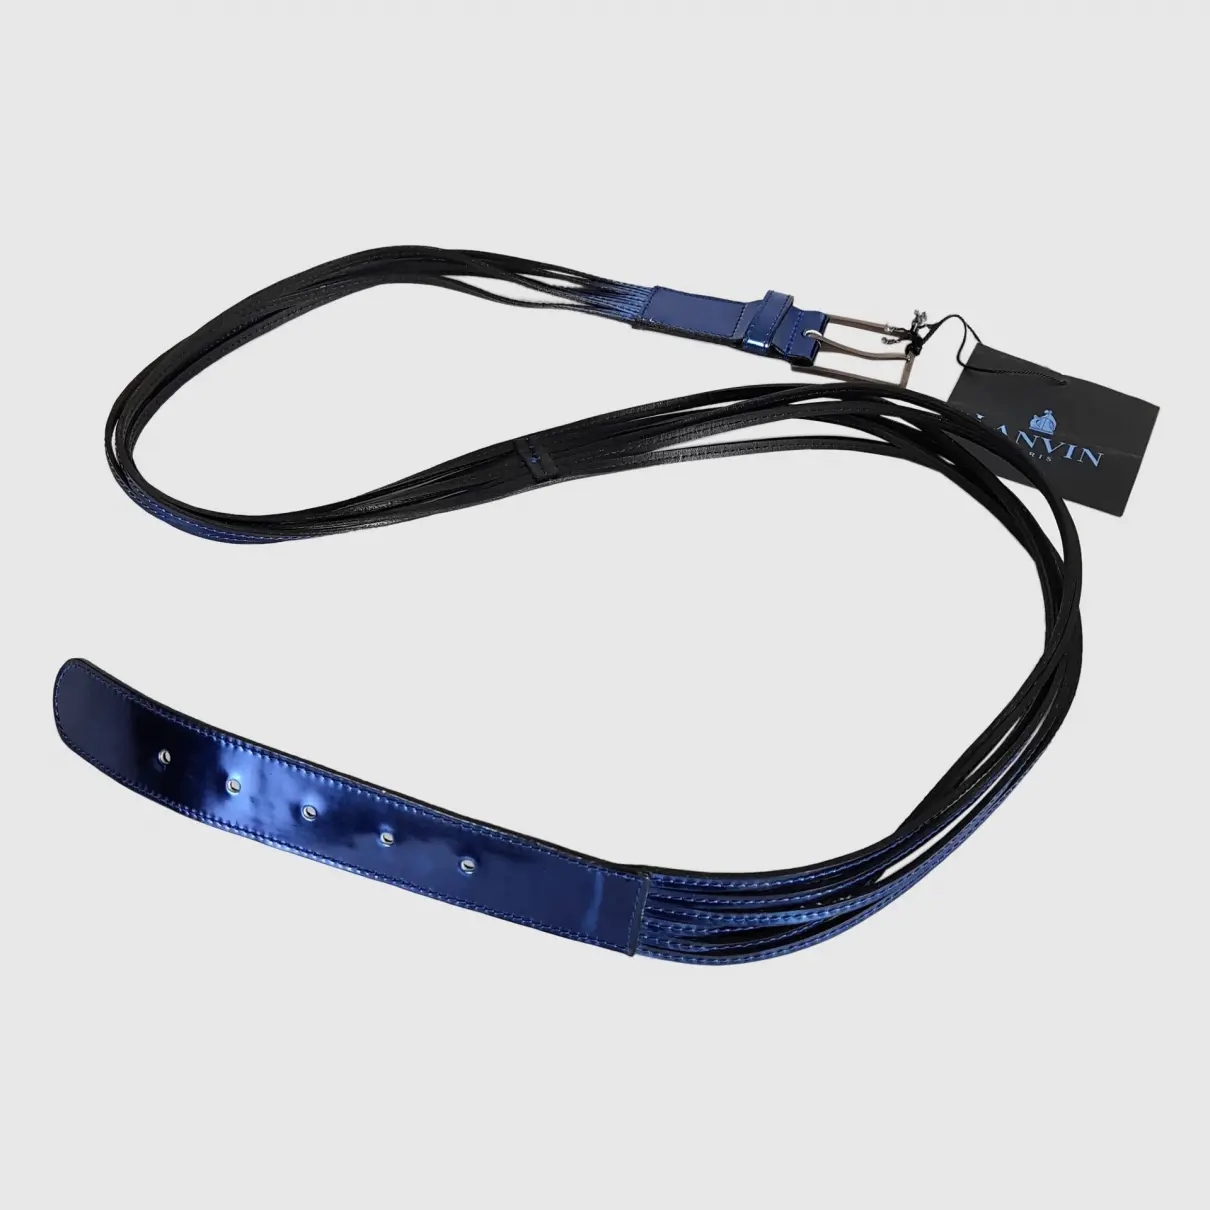 Buy Lanvin Leather belt online